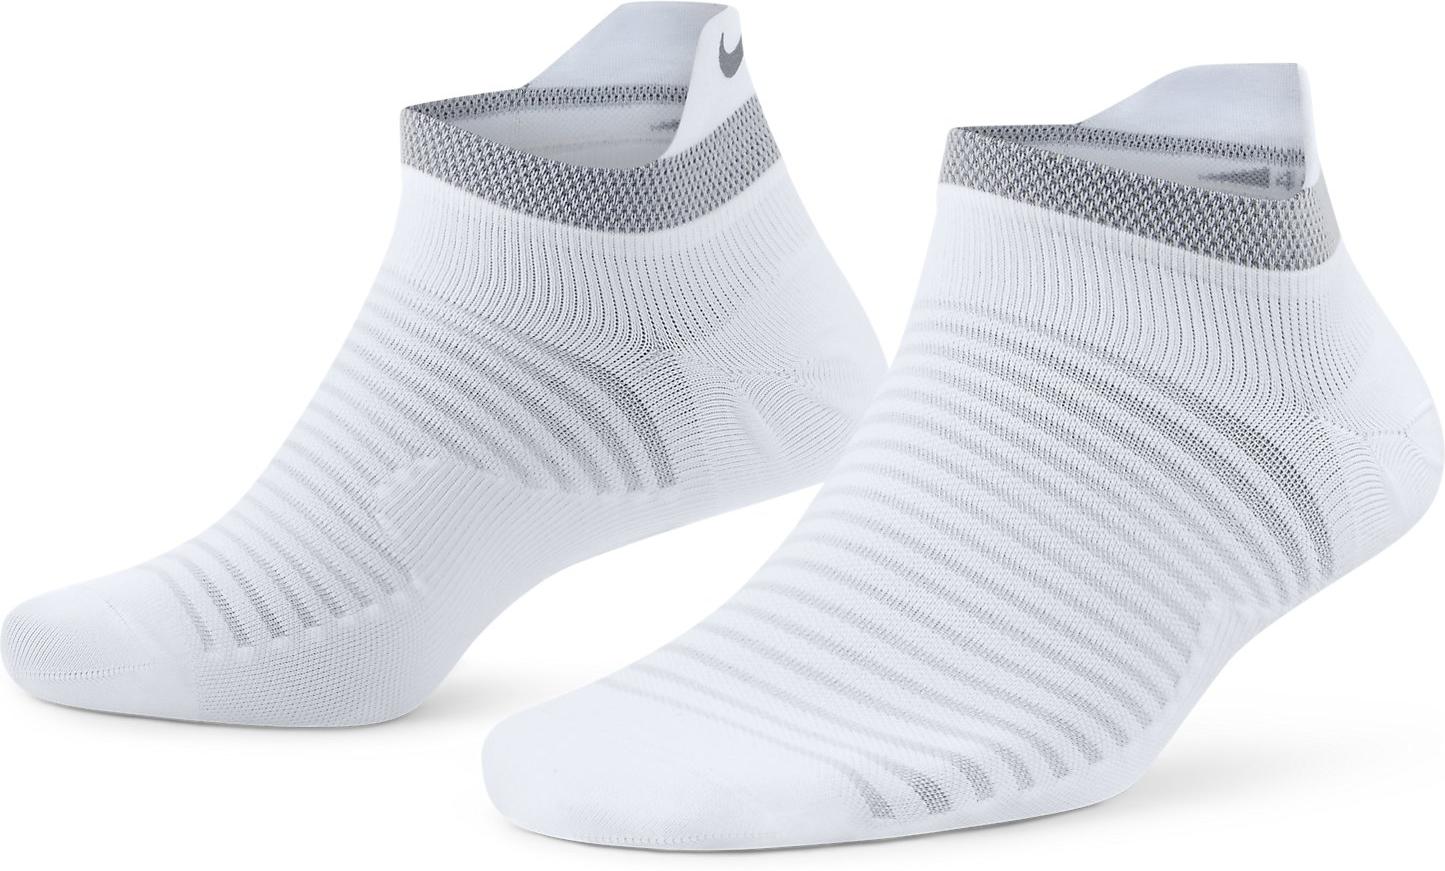 Socks Nike Spark Lightweight